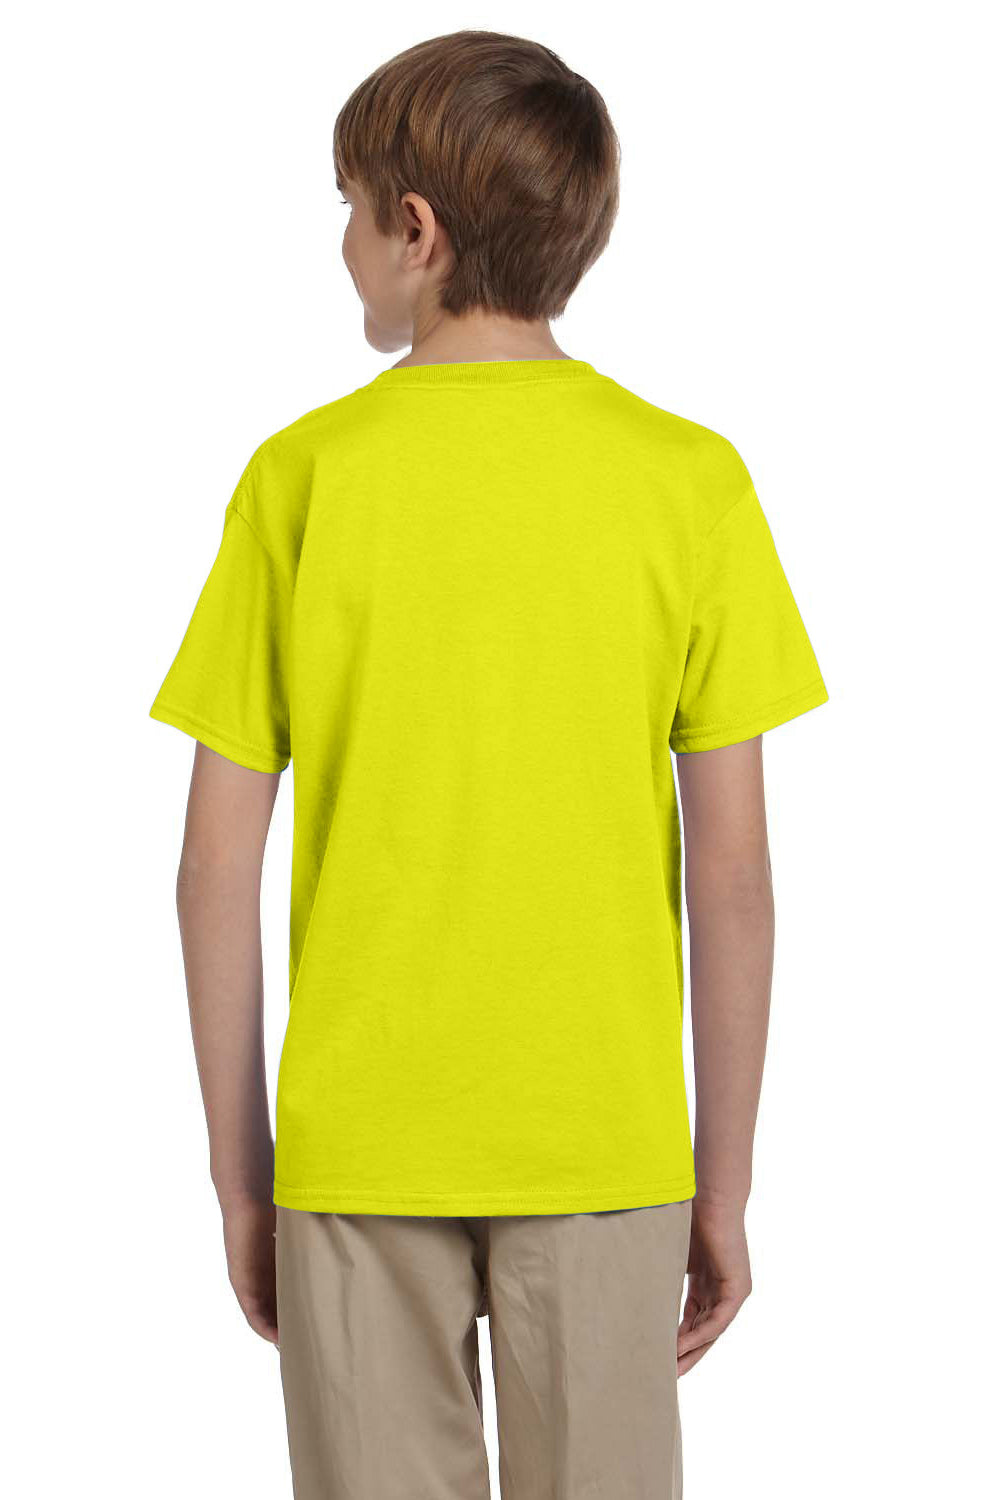 Hanes 5370 Youth EcoSmart Short Sleeve Crewneck T-Shirt Safety Green Back